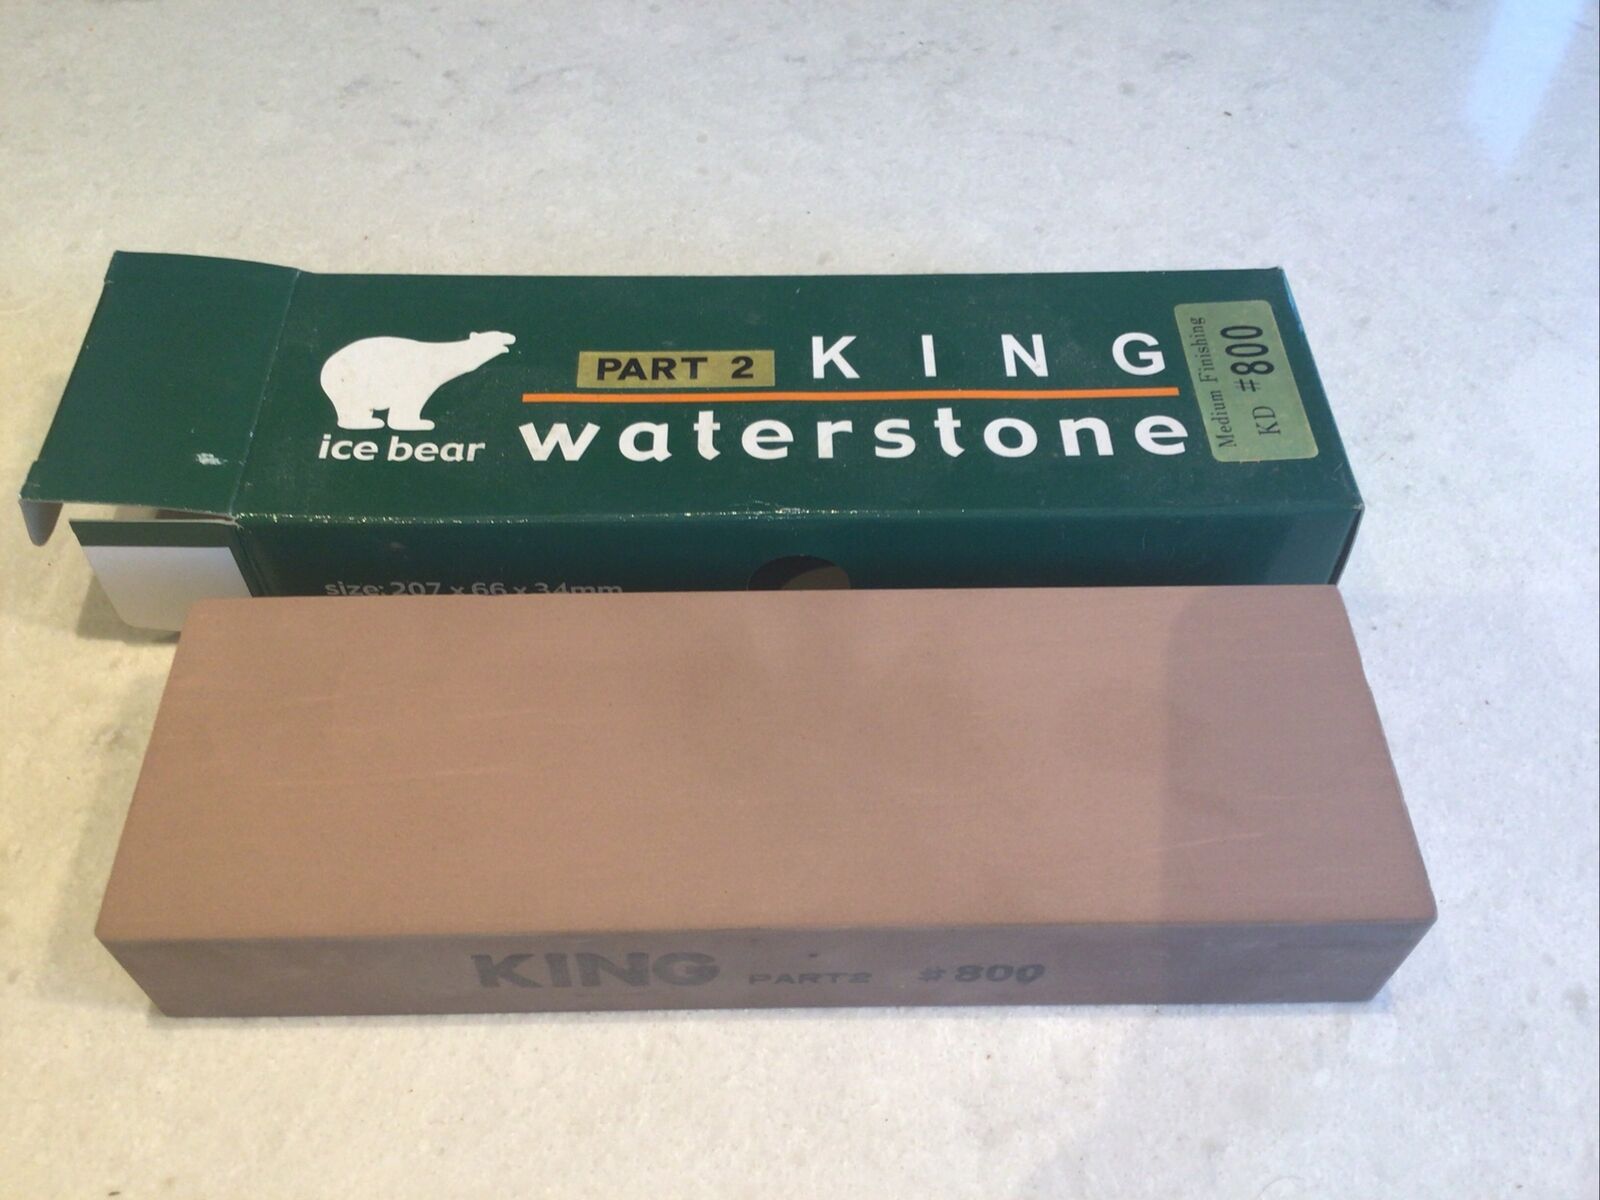 Japanese waterstone whetstone knife sharpener King KD #800 Large Big ICE BEAR